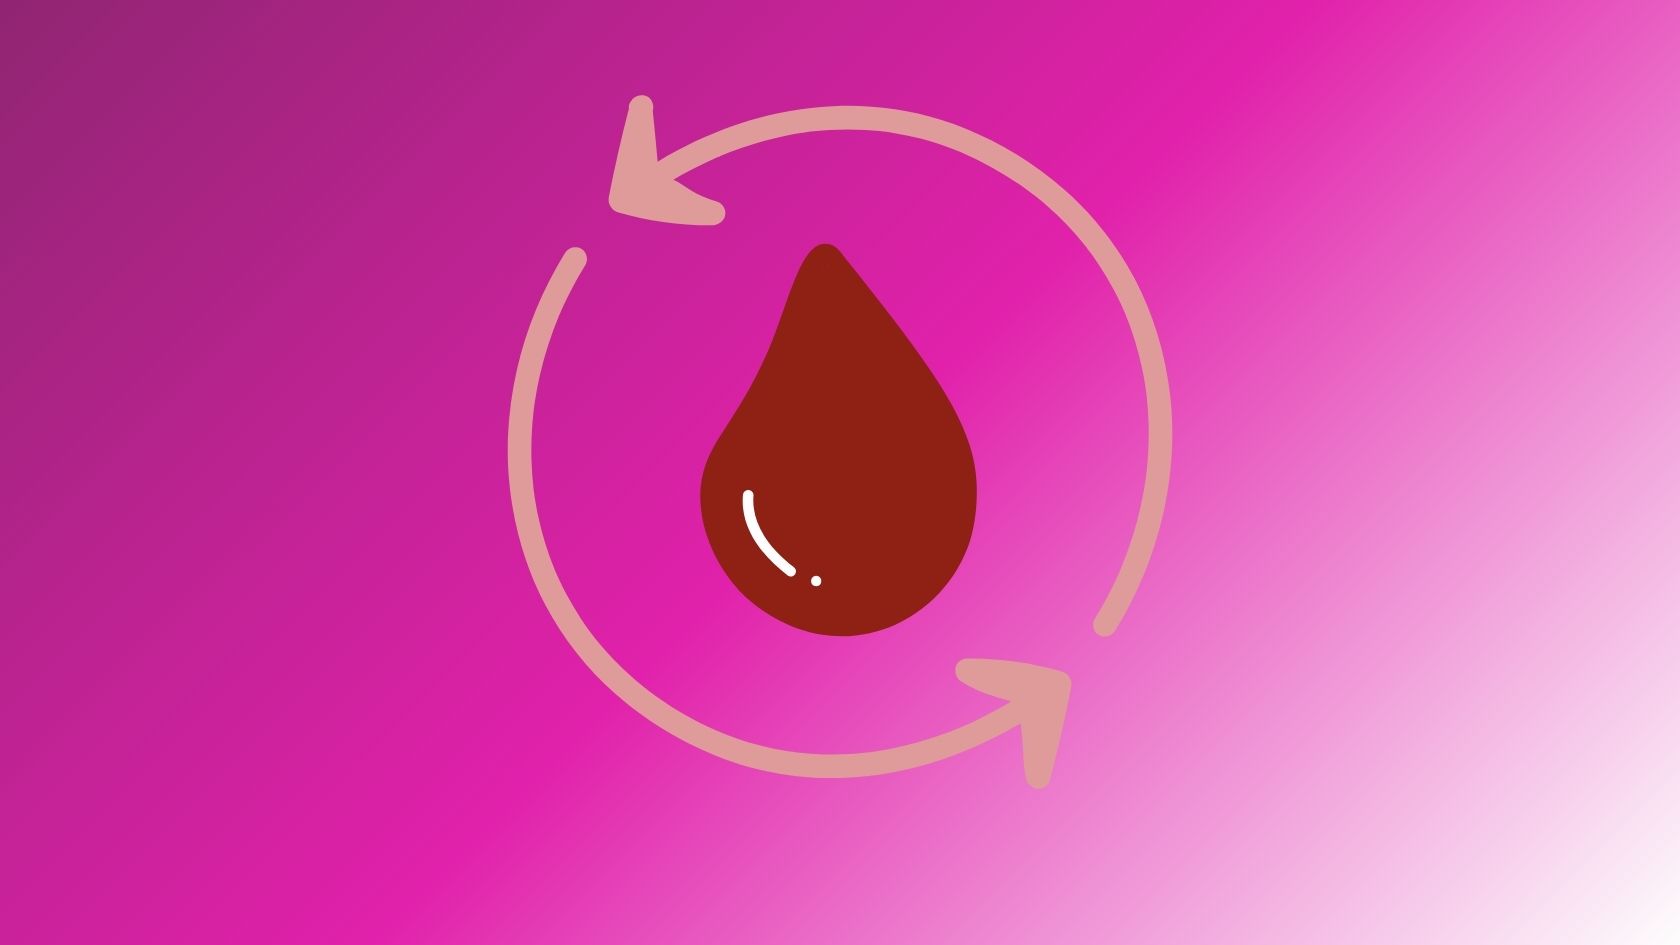 Uterine bleeding: how understanding endometrial physiology underpins  menstrual health